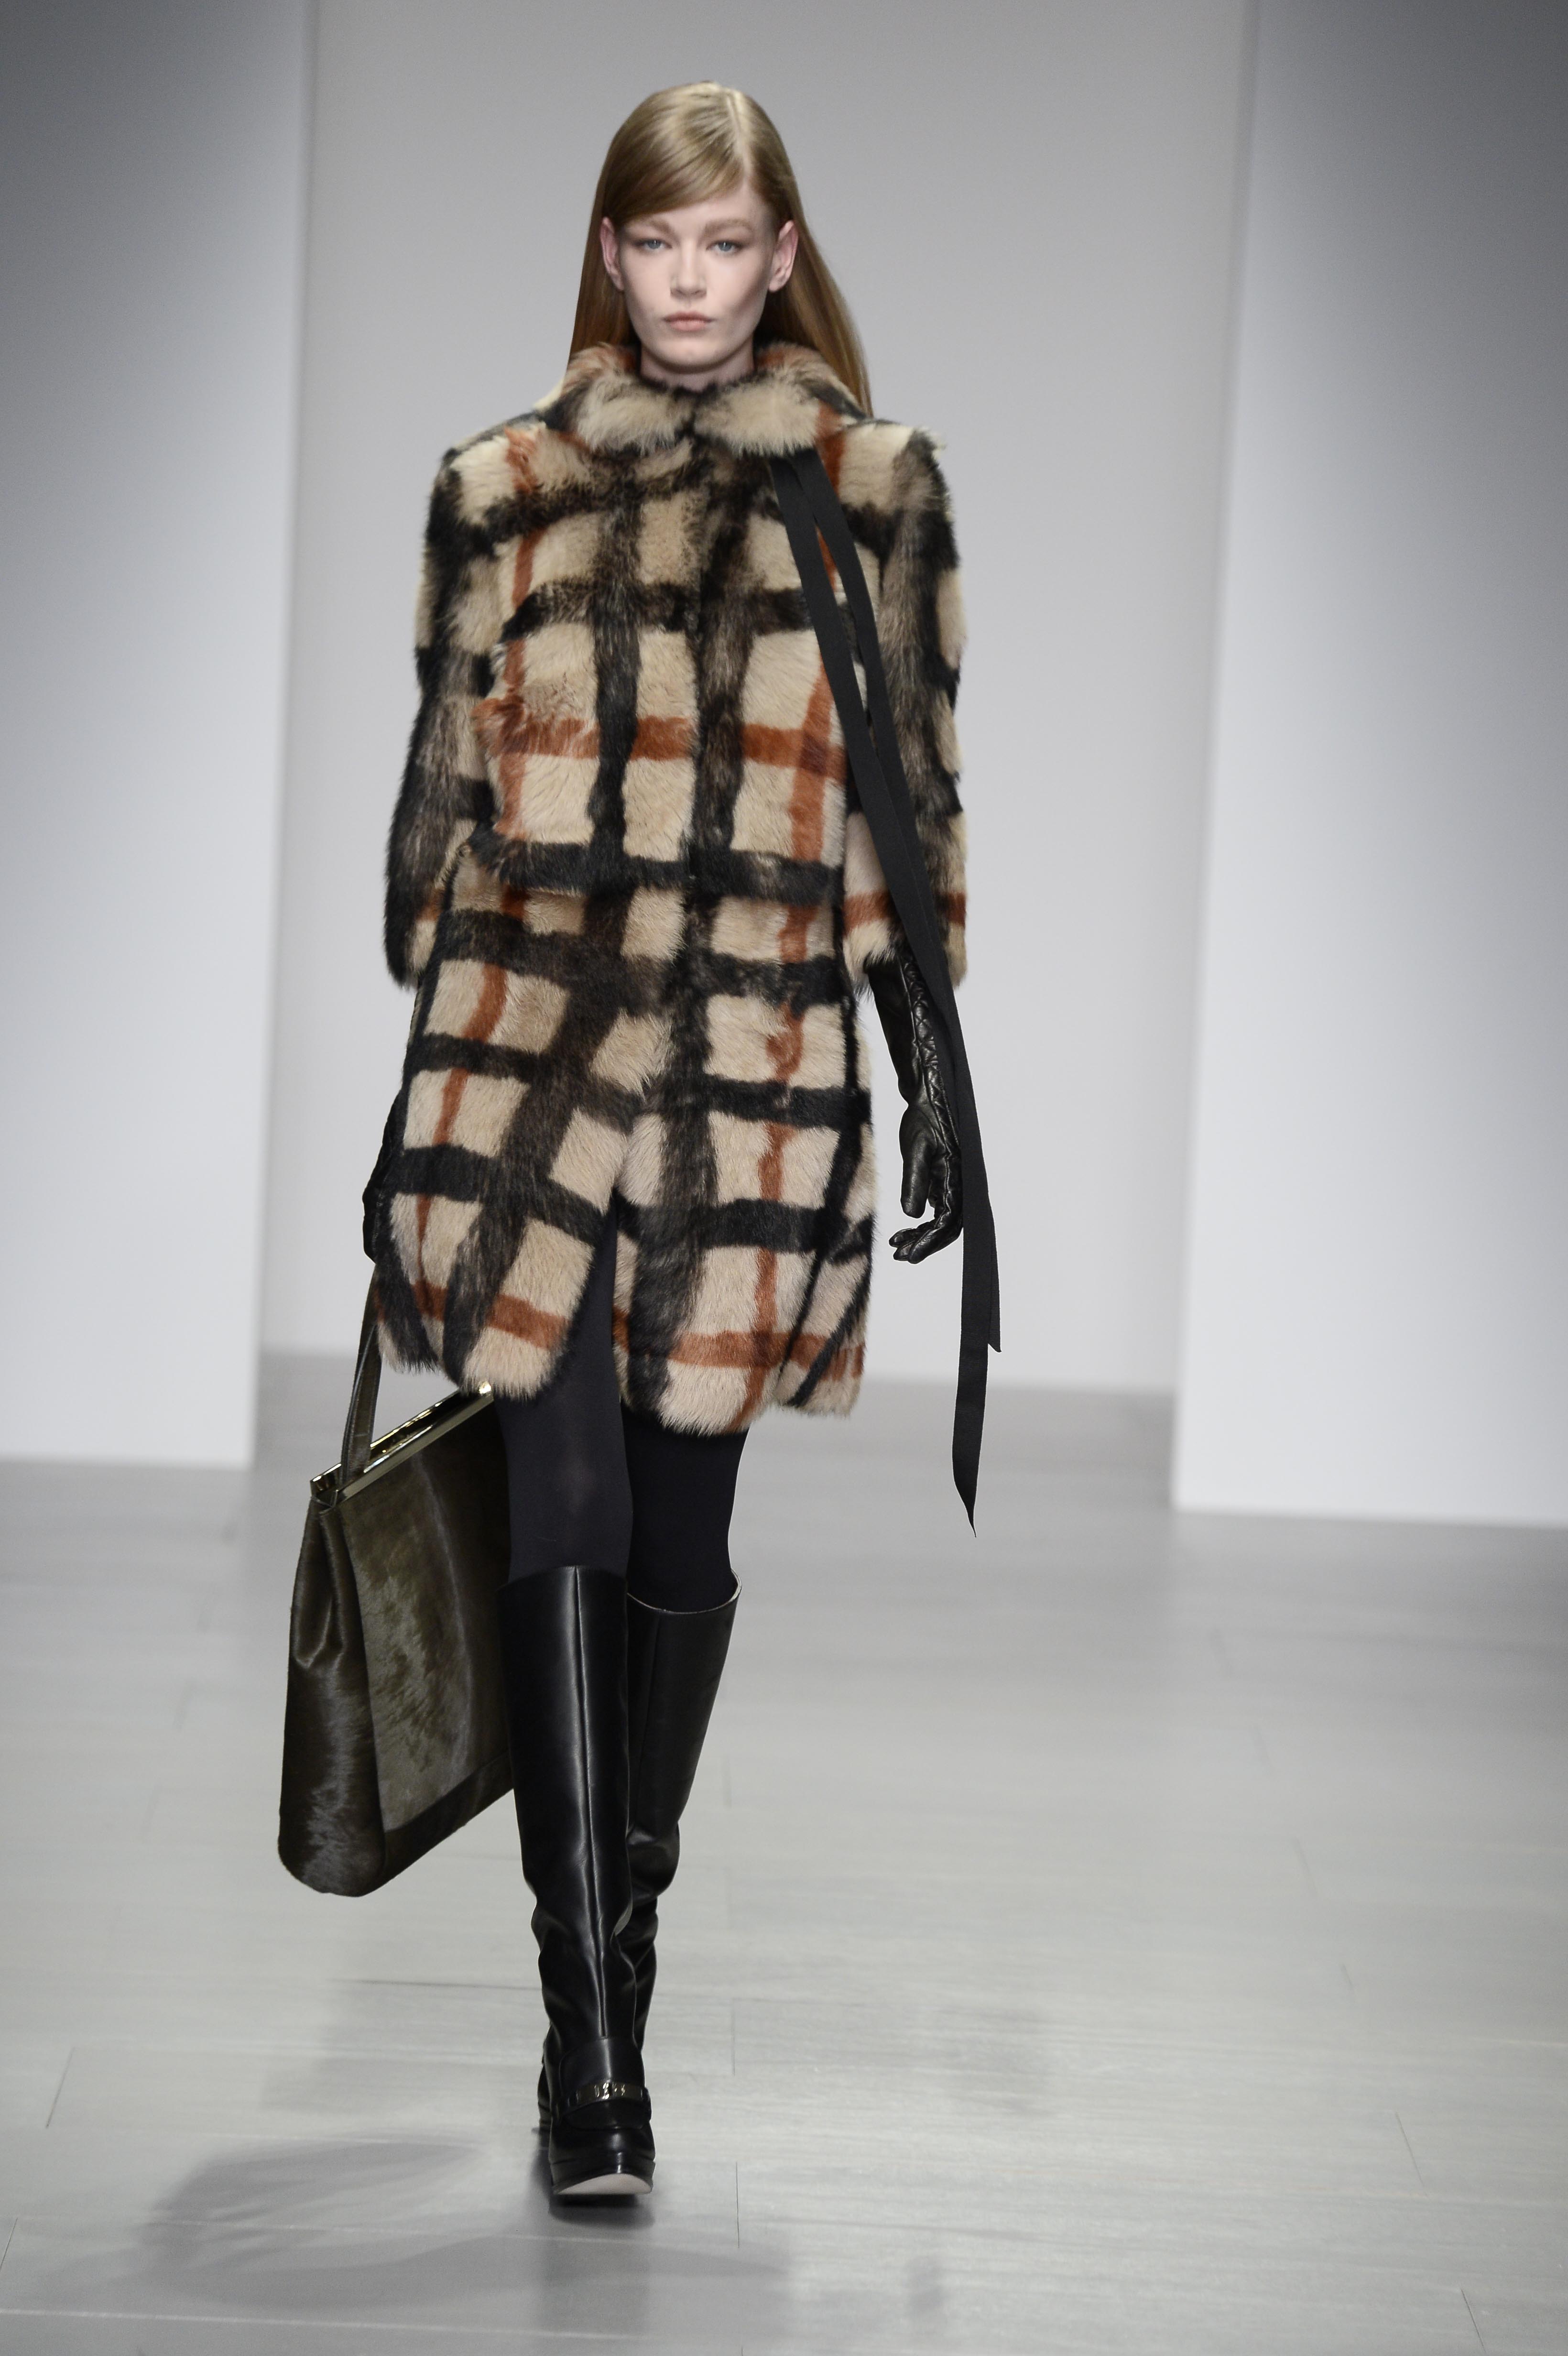 Womenswear Autum/Winter 2014 Kollektion